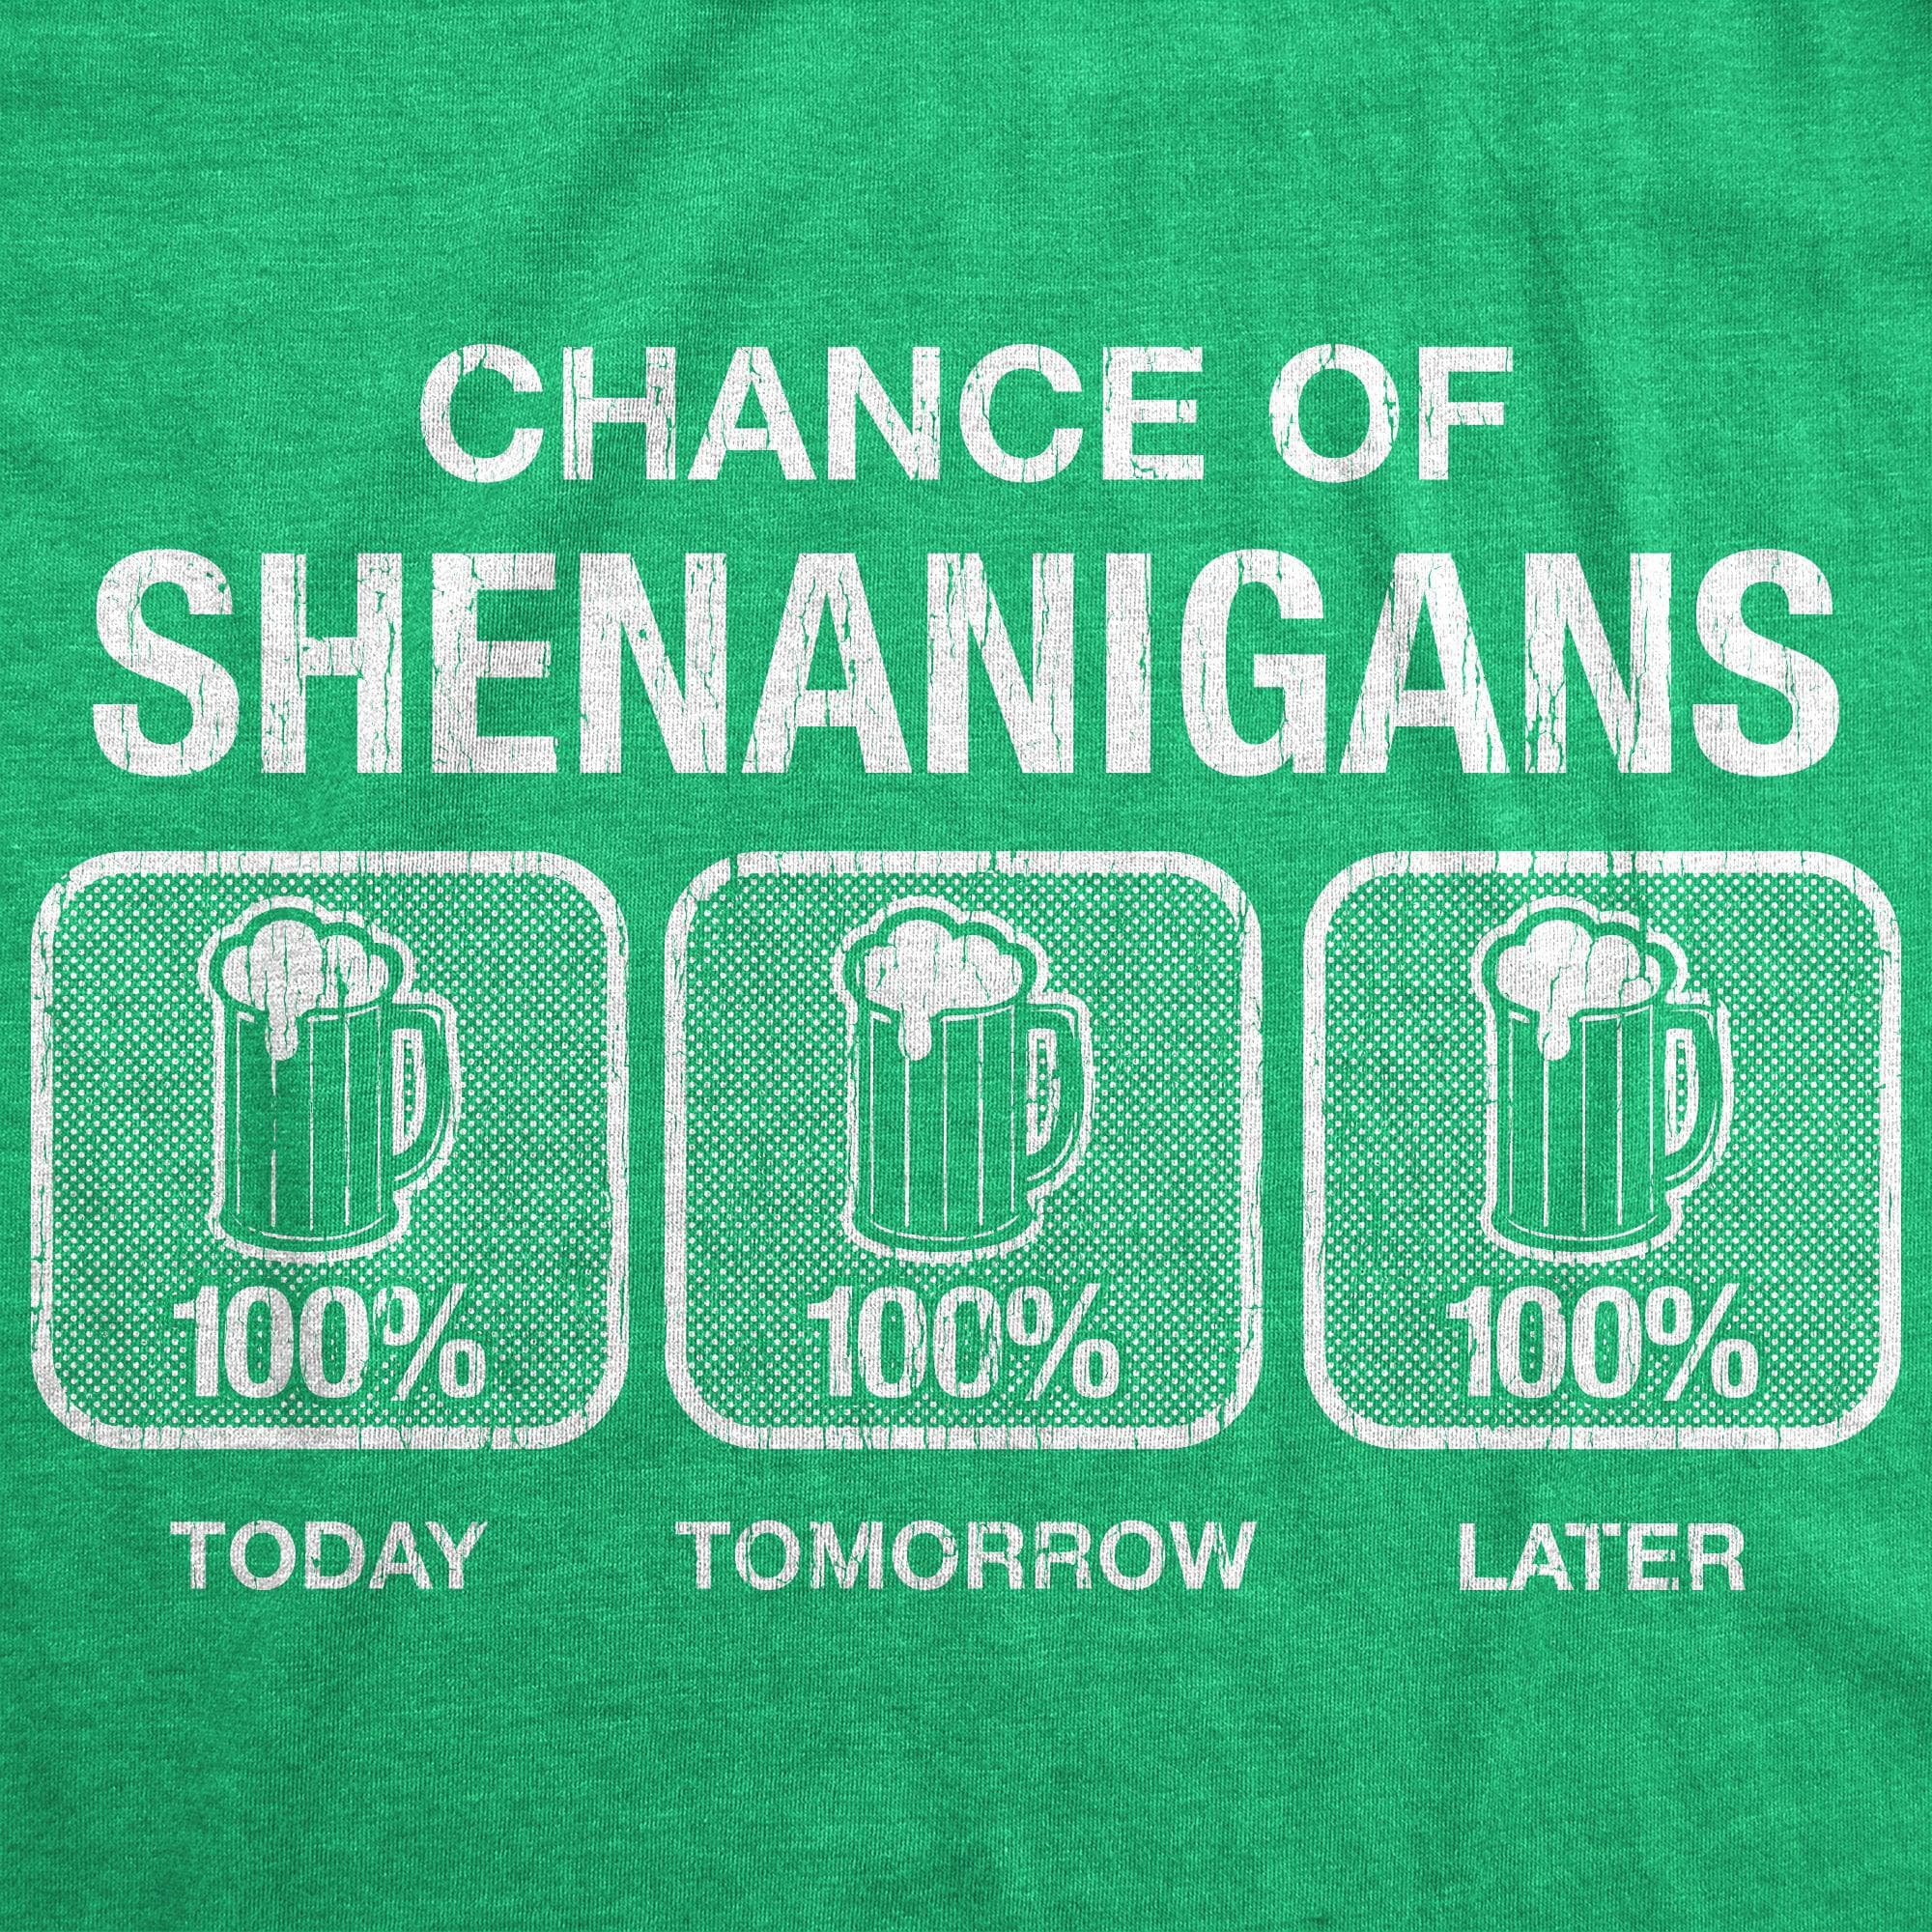 100% Chance Of Shenanigans Women's Tshirt  -  Crazy Dog T-Shirts